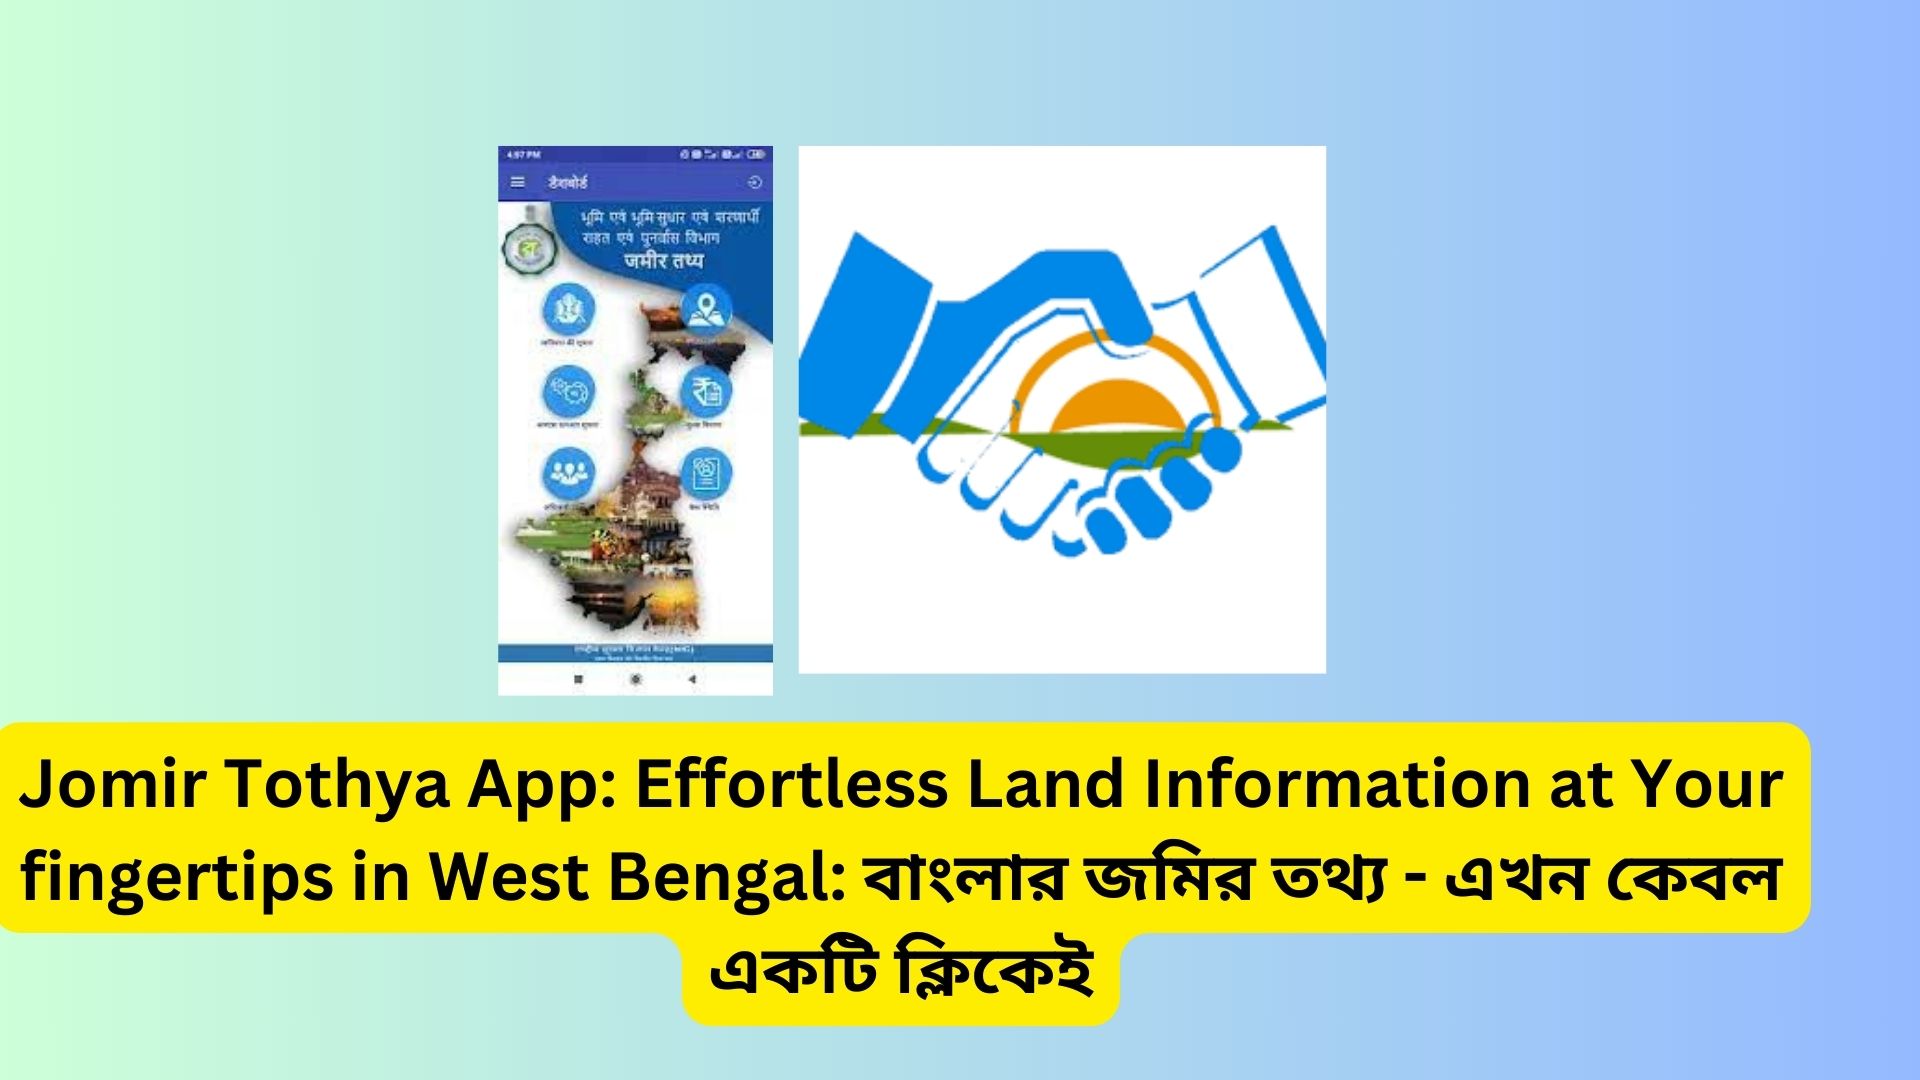 Jomir Tothya App: Effortless Land Information at Your fingertips in West Bengal: বাংলার জমির তথ্য - এখন কেবল একটি ক্লিকেই